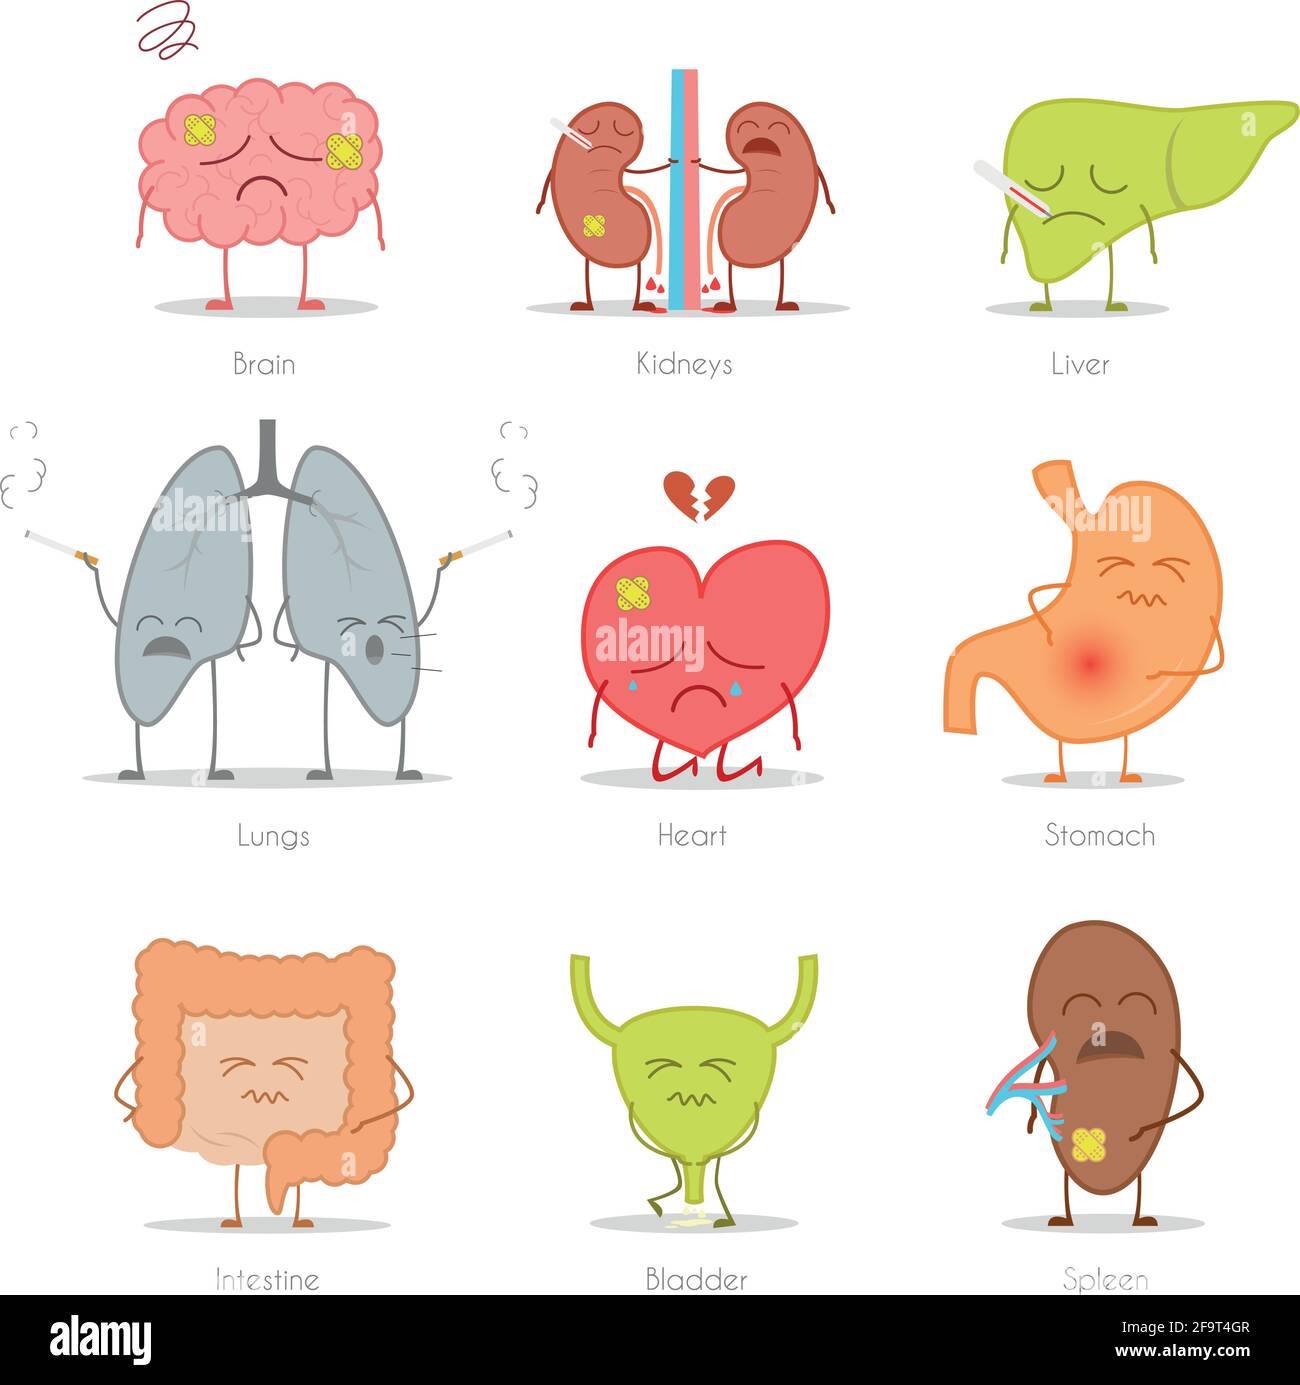 Set of 9 sick human organs in cartoon style: brain, kidneys, liver, lungs, heart, stomach, intestine, bladder and spleen. Stock Vector